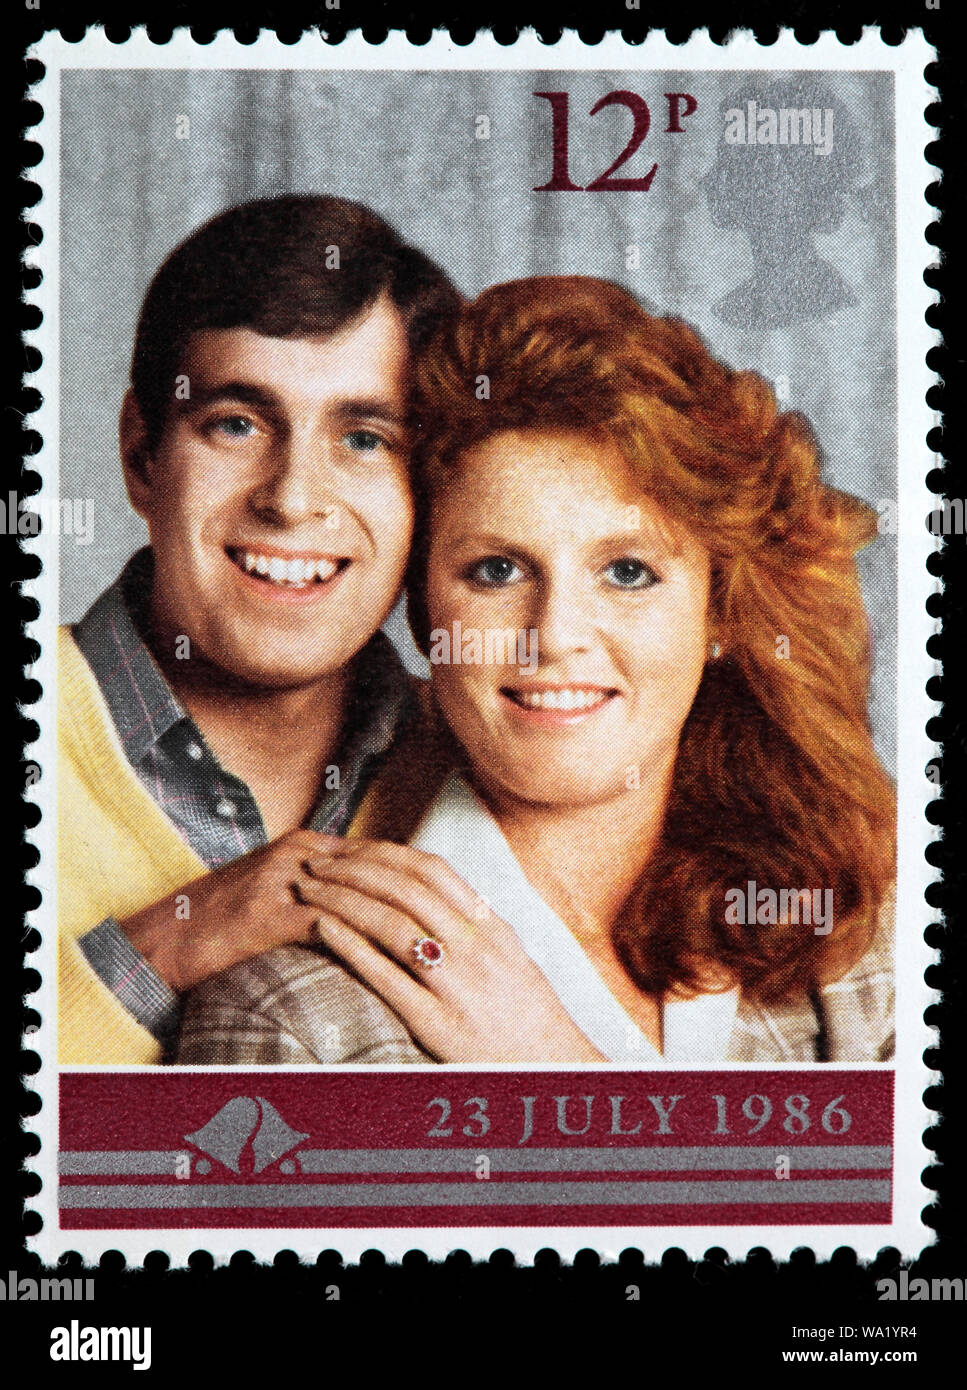 Prince Andrew and Sarah Ferguson, postage stamp, UK, 1986 Stock Photo